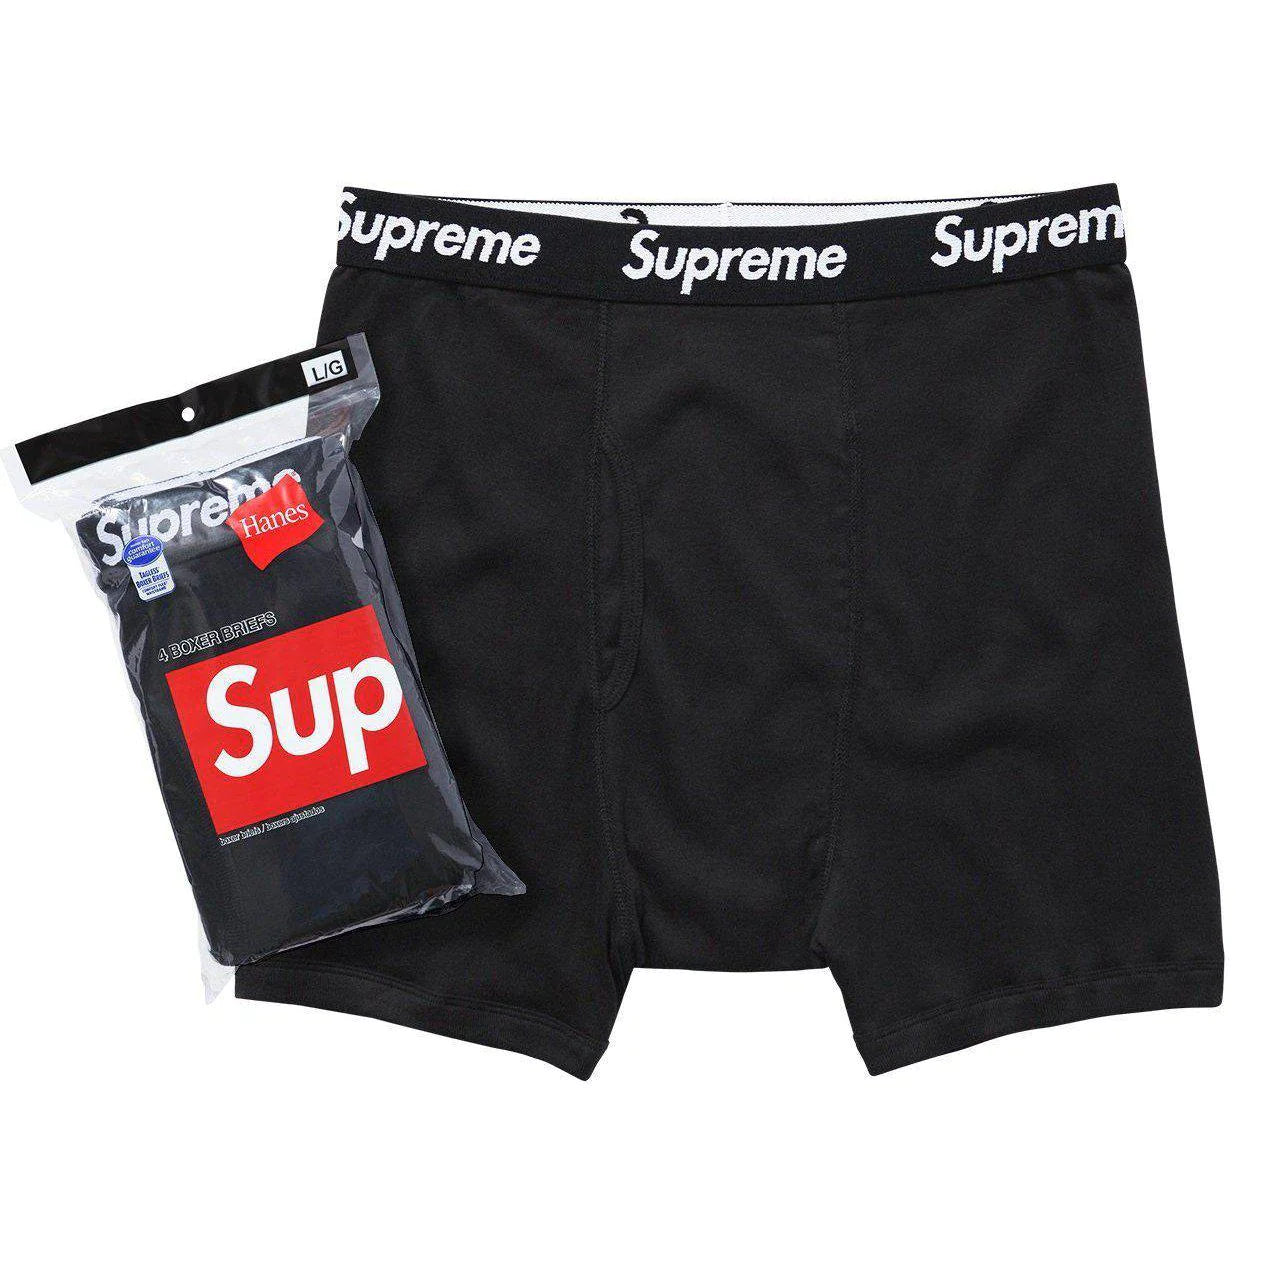 Supreme - Hanes Boxers 4 Pack (Black)